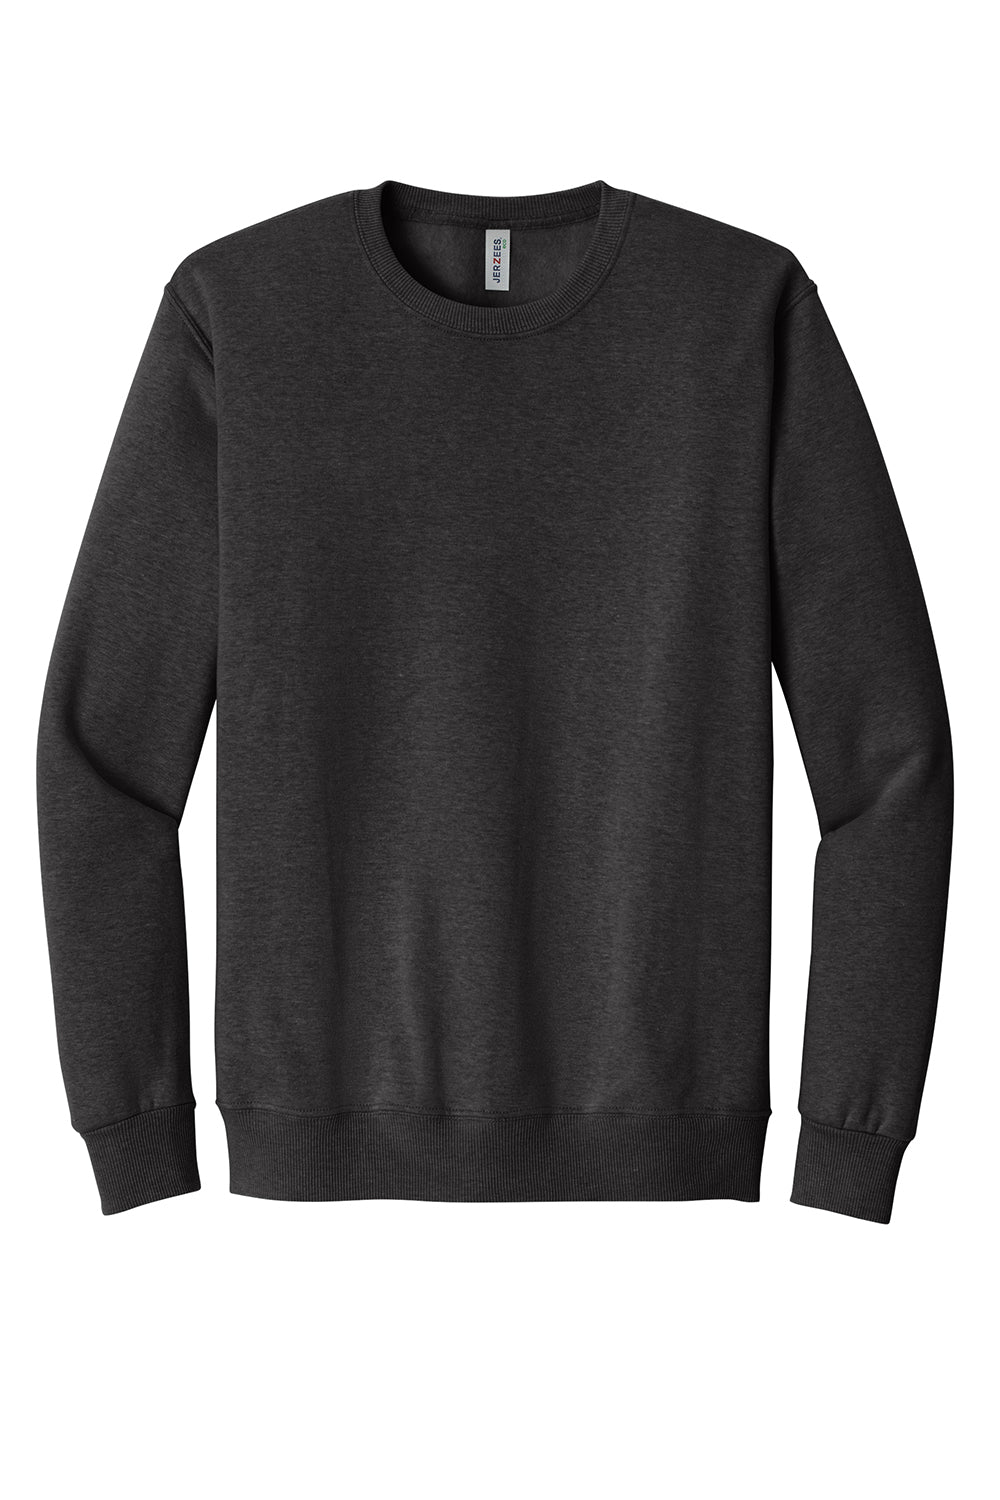 Jerzees 701M Mens Eco Premium Crewneck Sweatshirt Heather Ink Black Flat Front